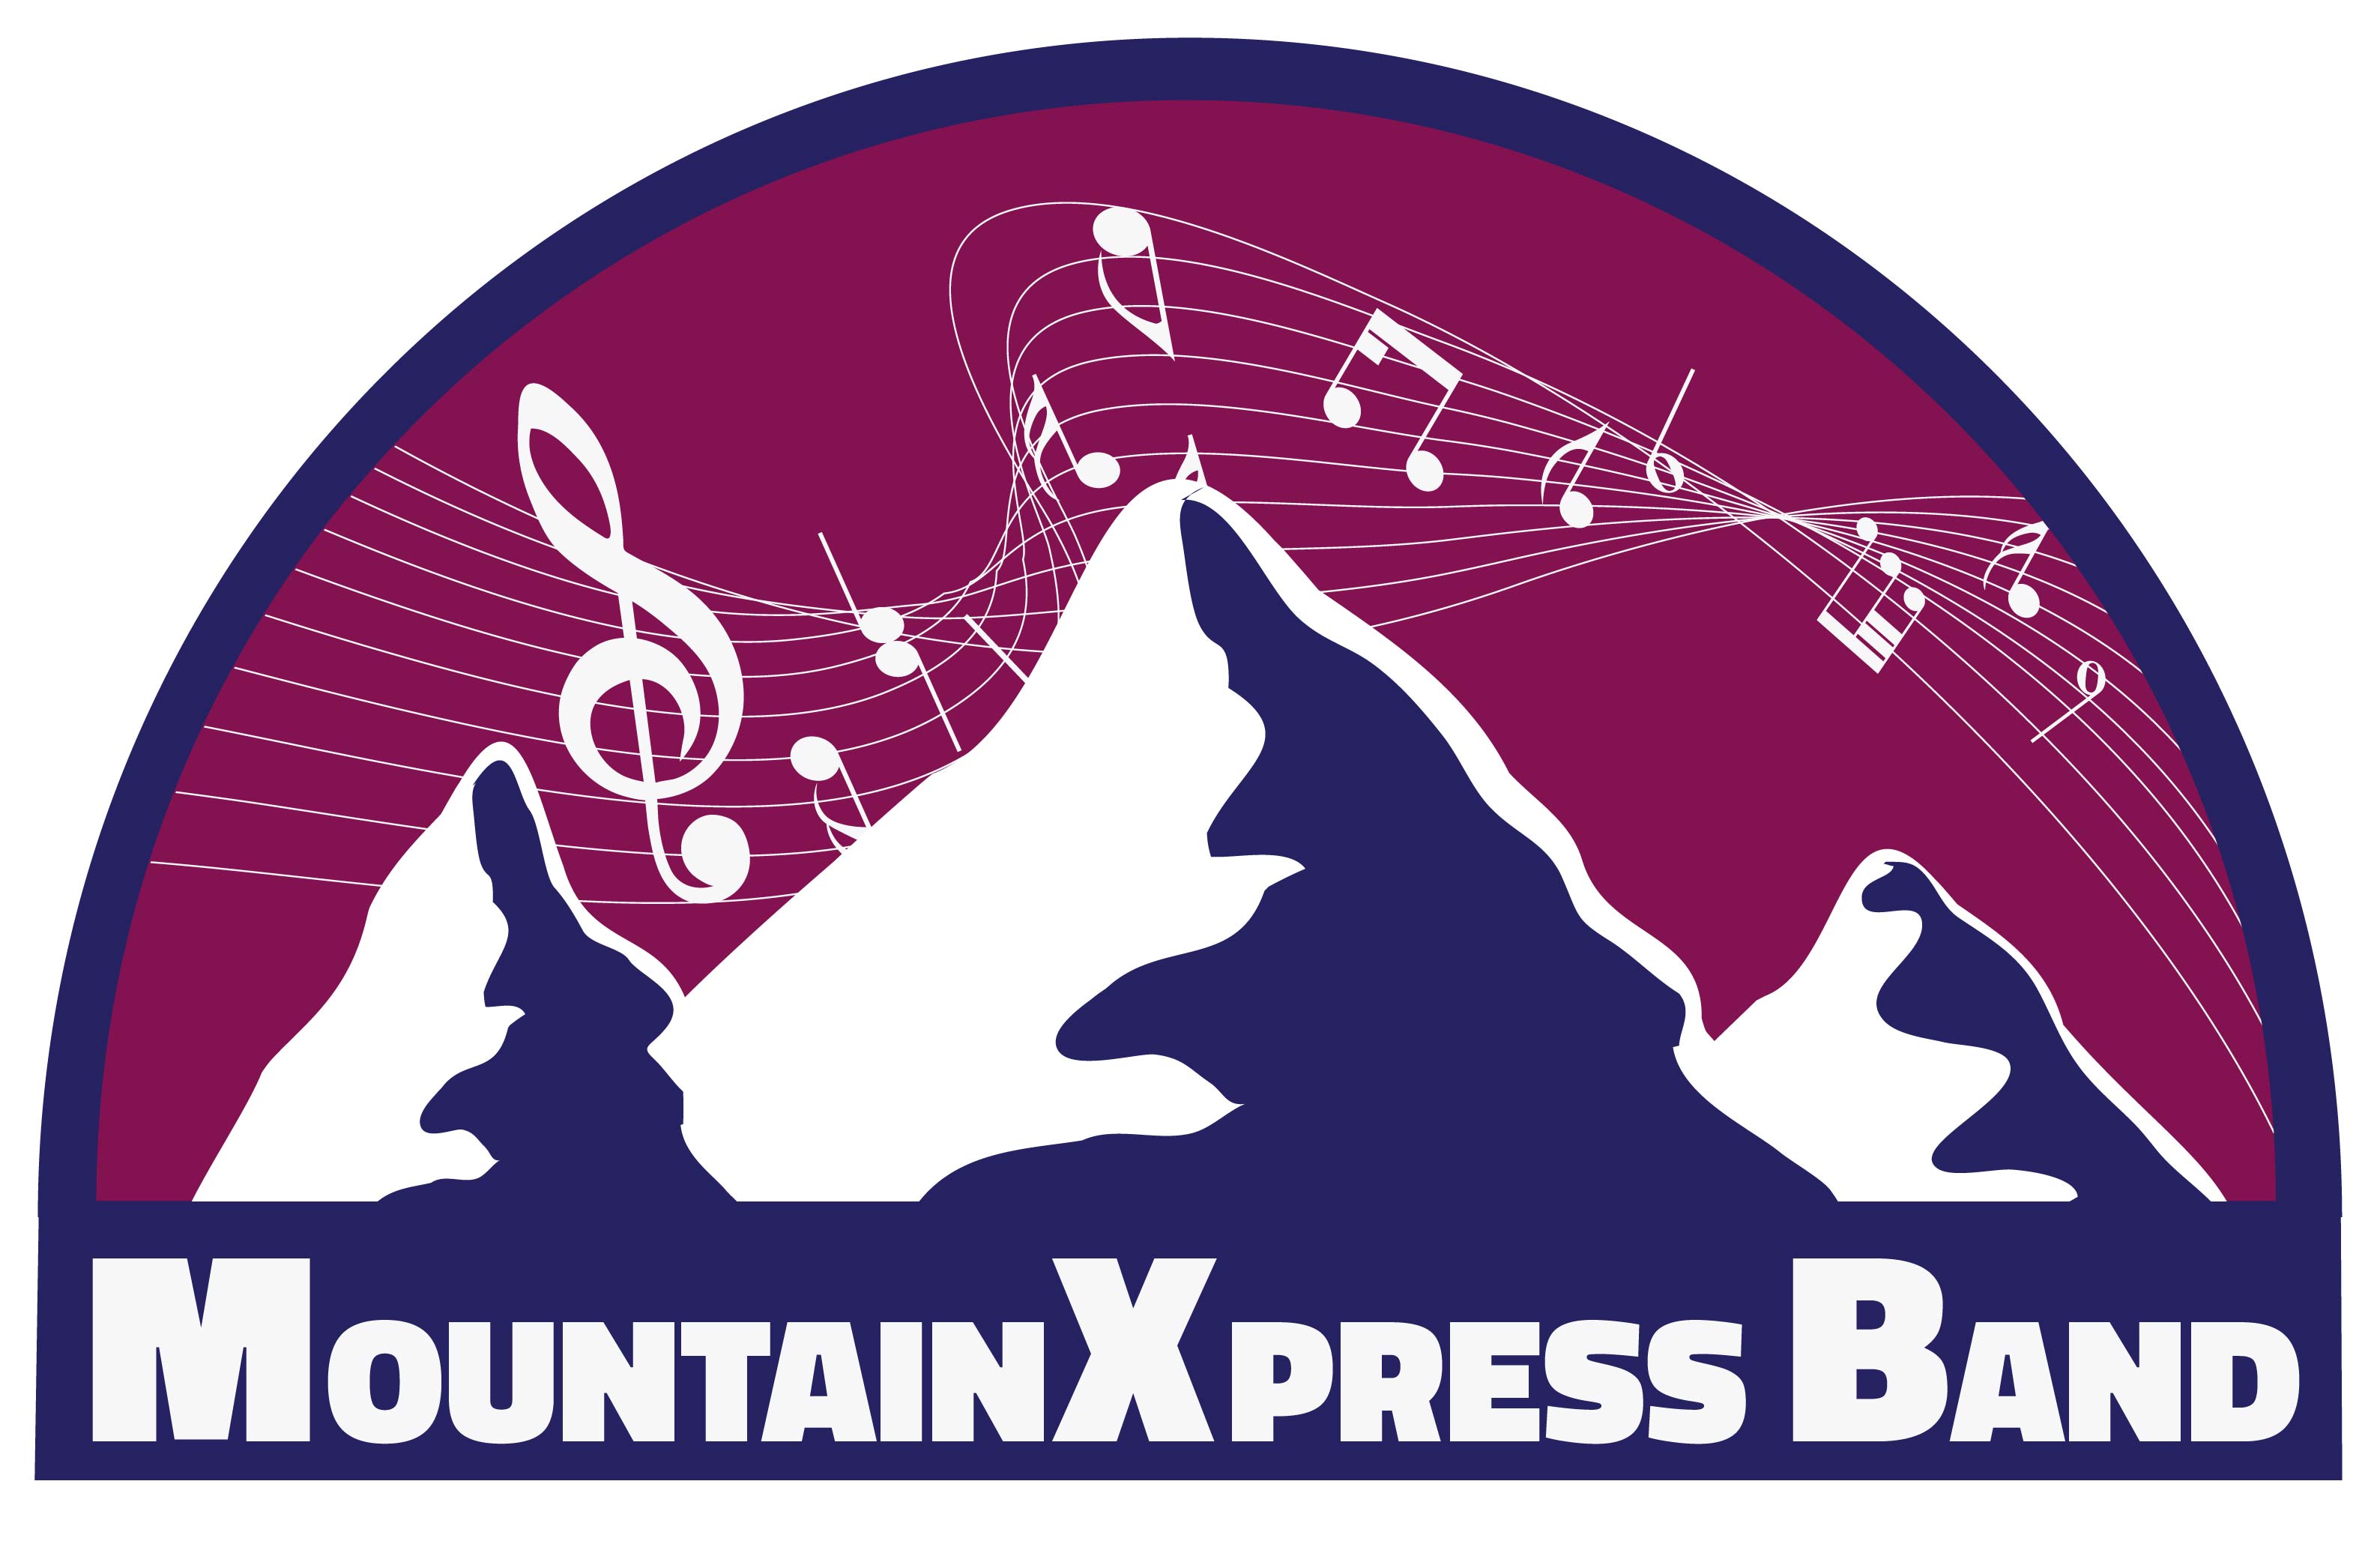 Mountain Xpress Band